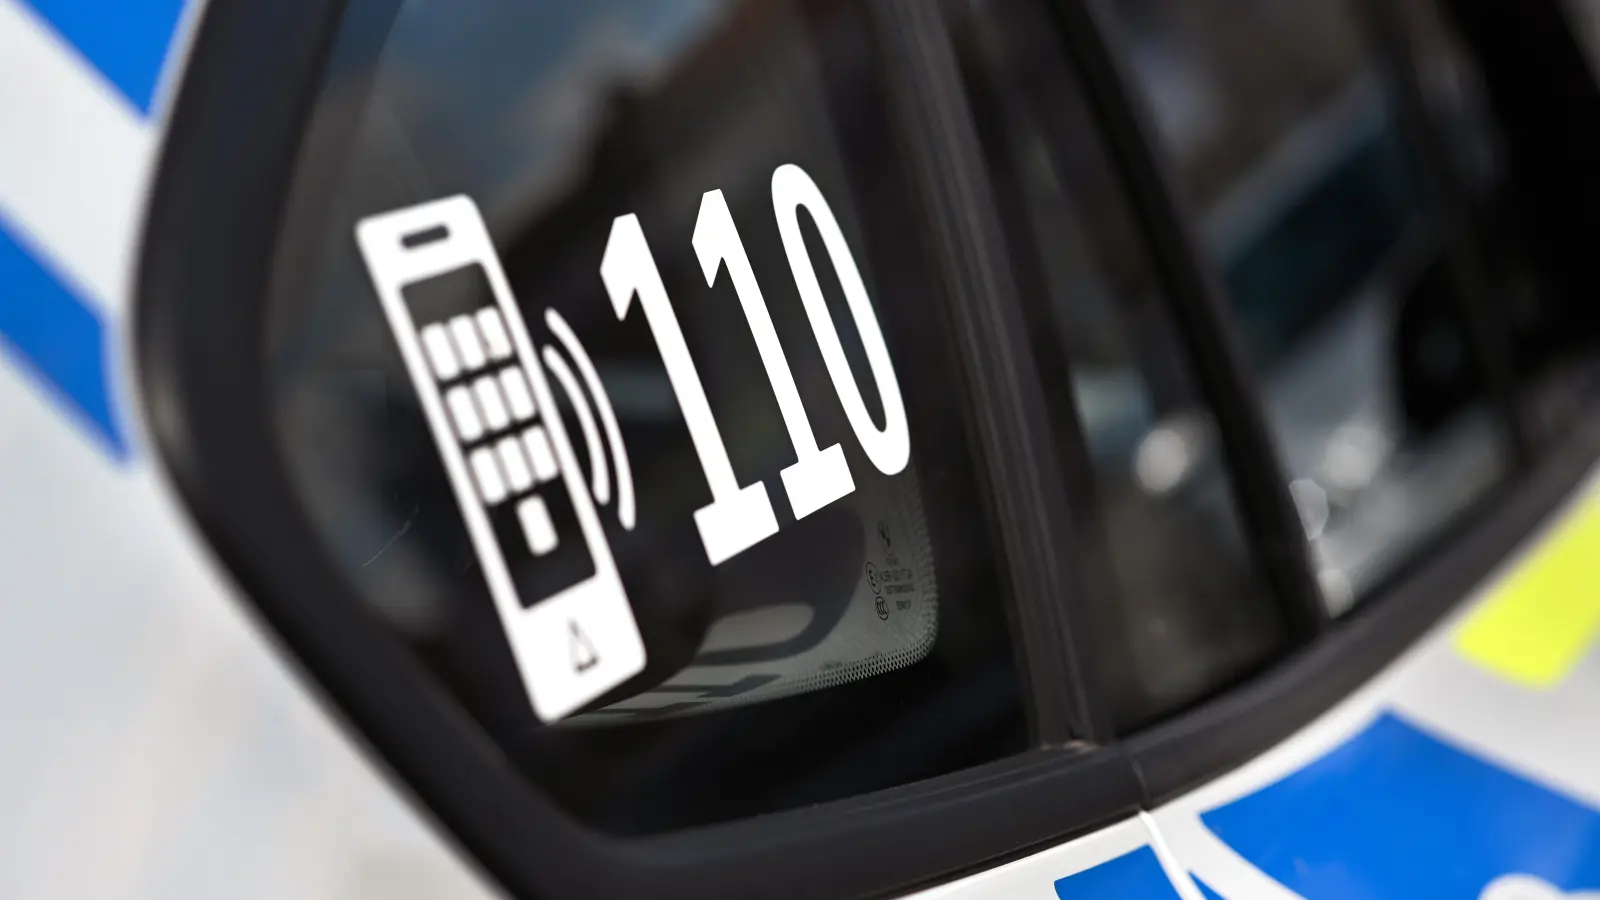 Details vom Polizei Auto (Symbolbild: Jim Albright)